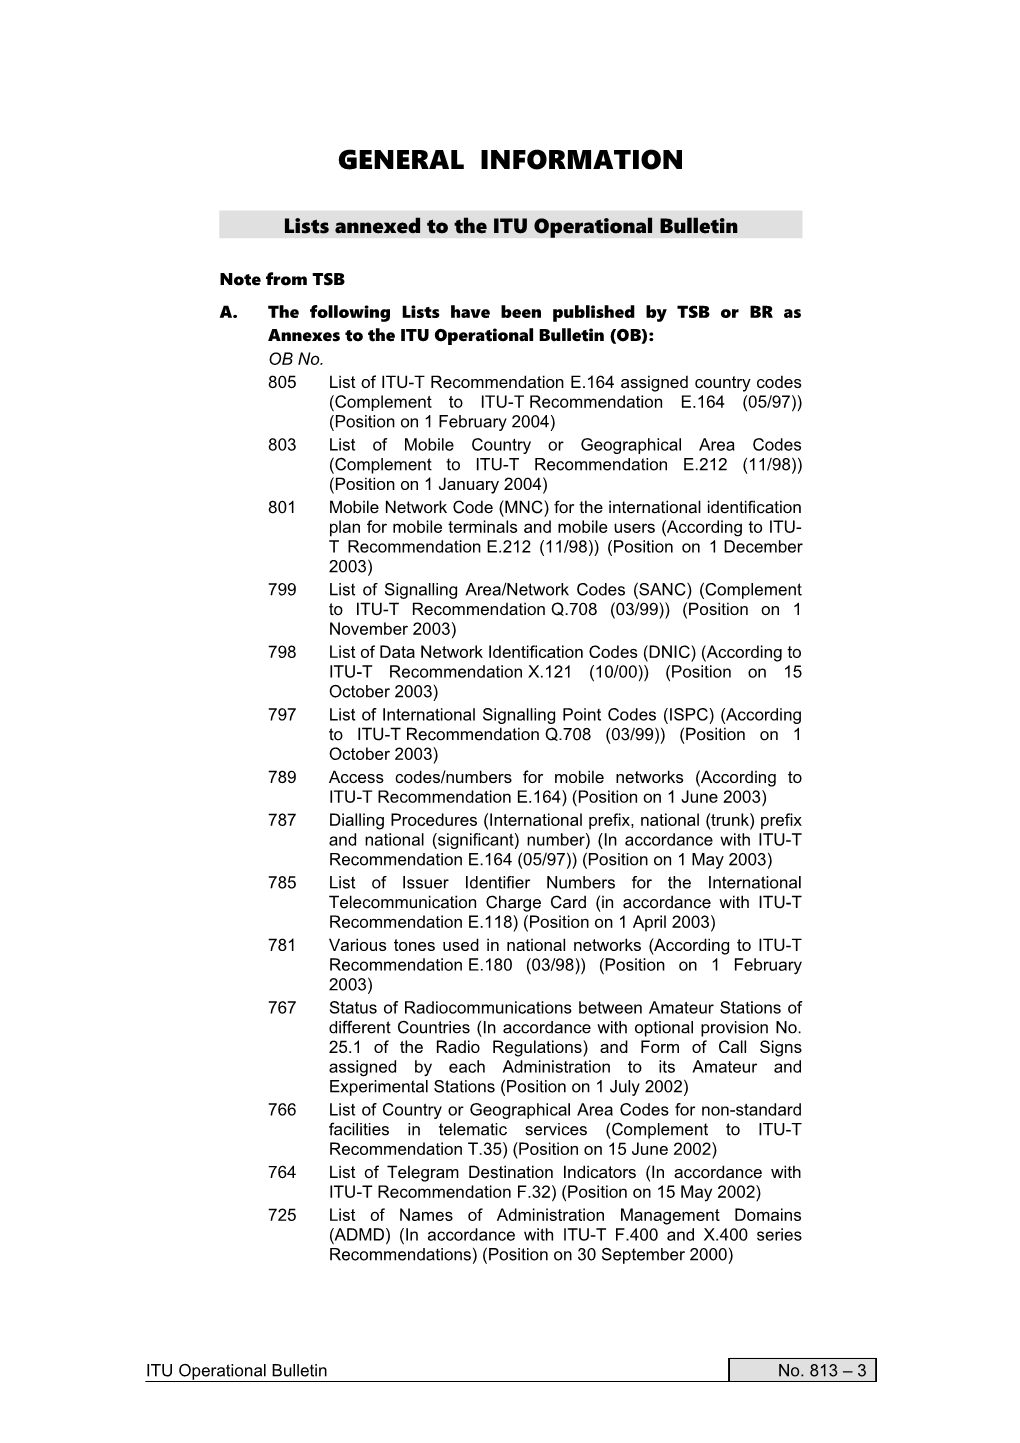 ITU Operational Bulletin No. 813 - 1.VI.2004